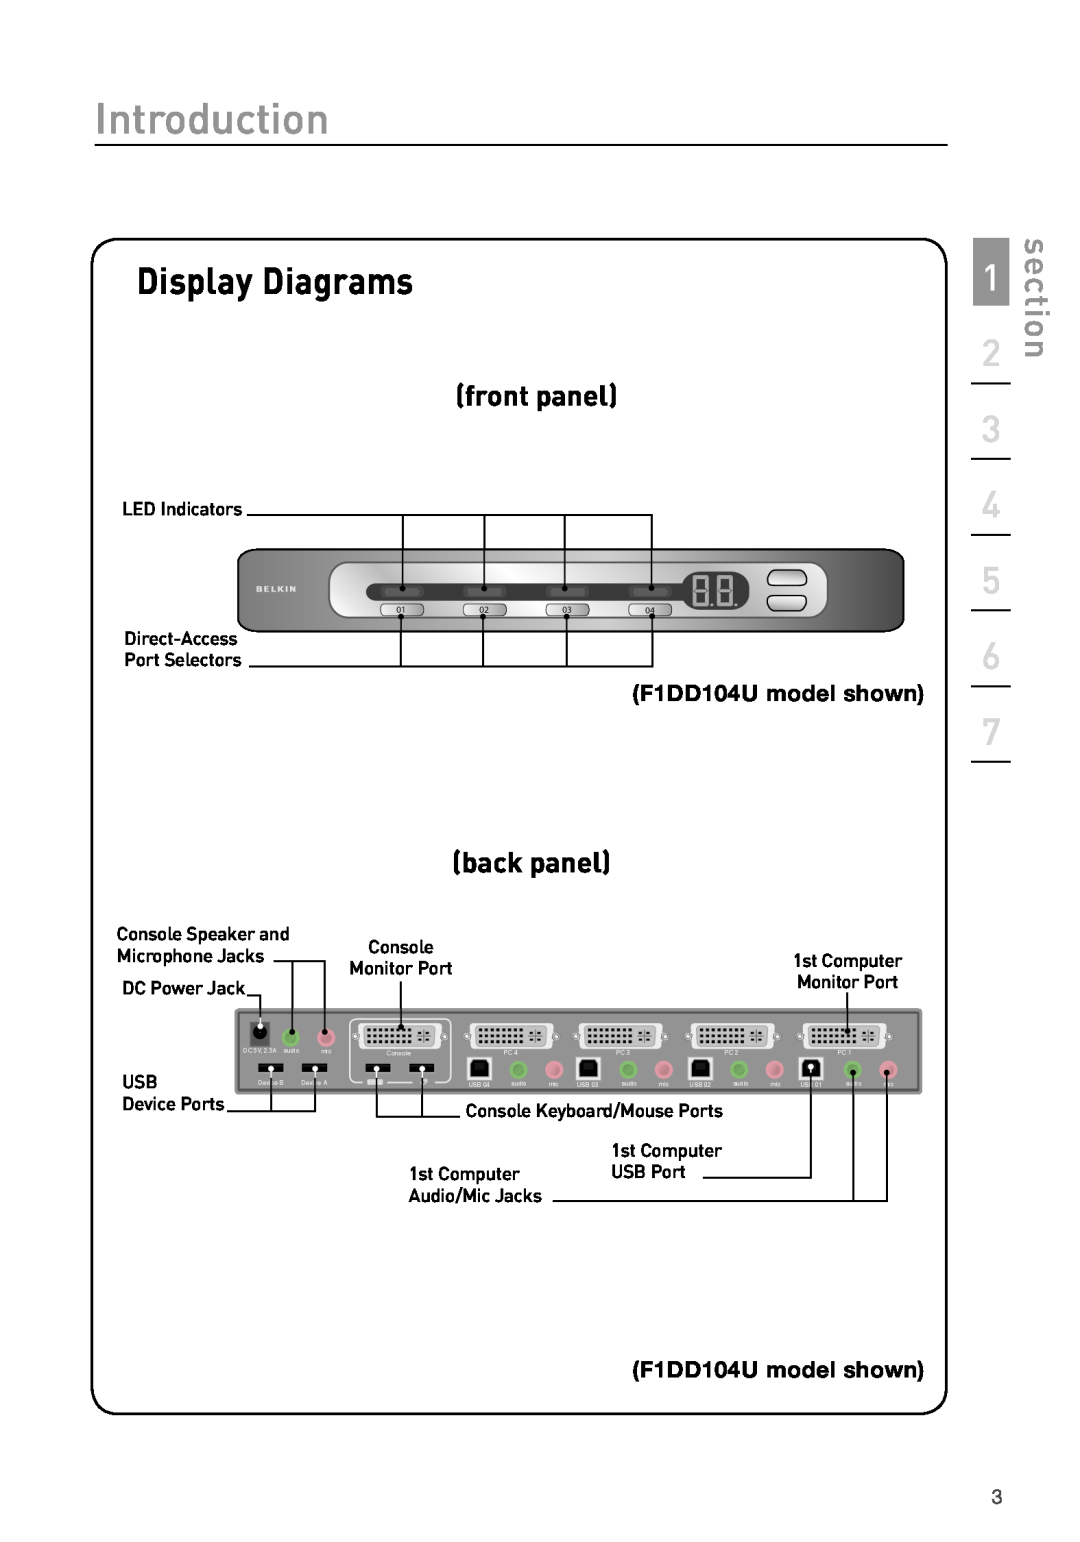 Belkin F1DD102U manual Display Diagrams, Introduction, F1DD104U model shown, front panel, Device A, Console, audio 